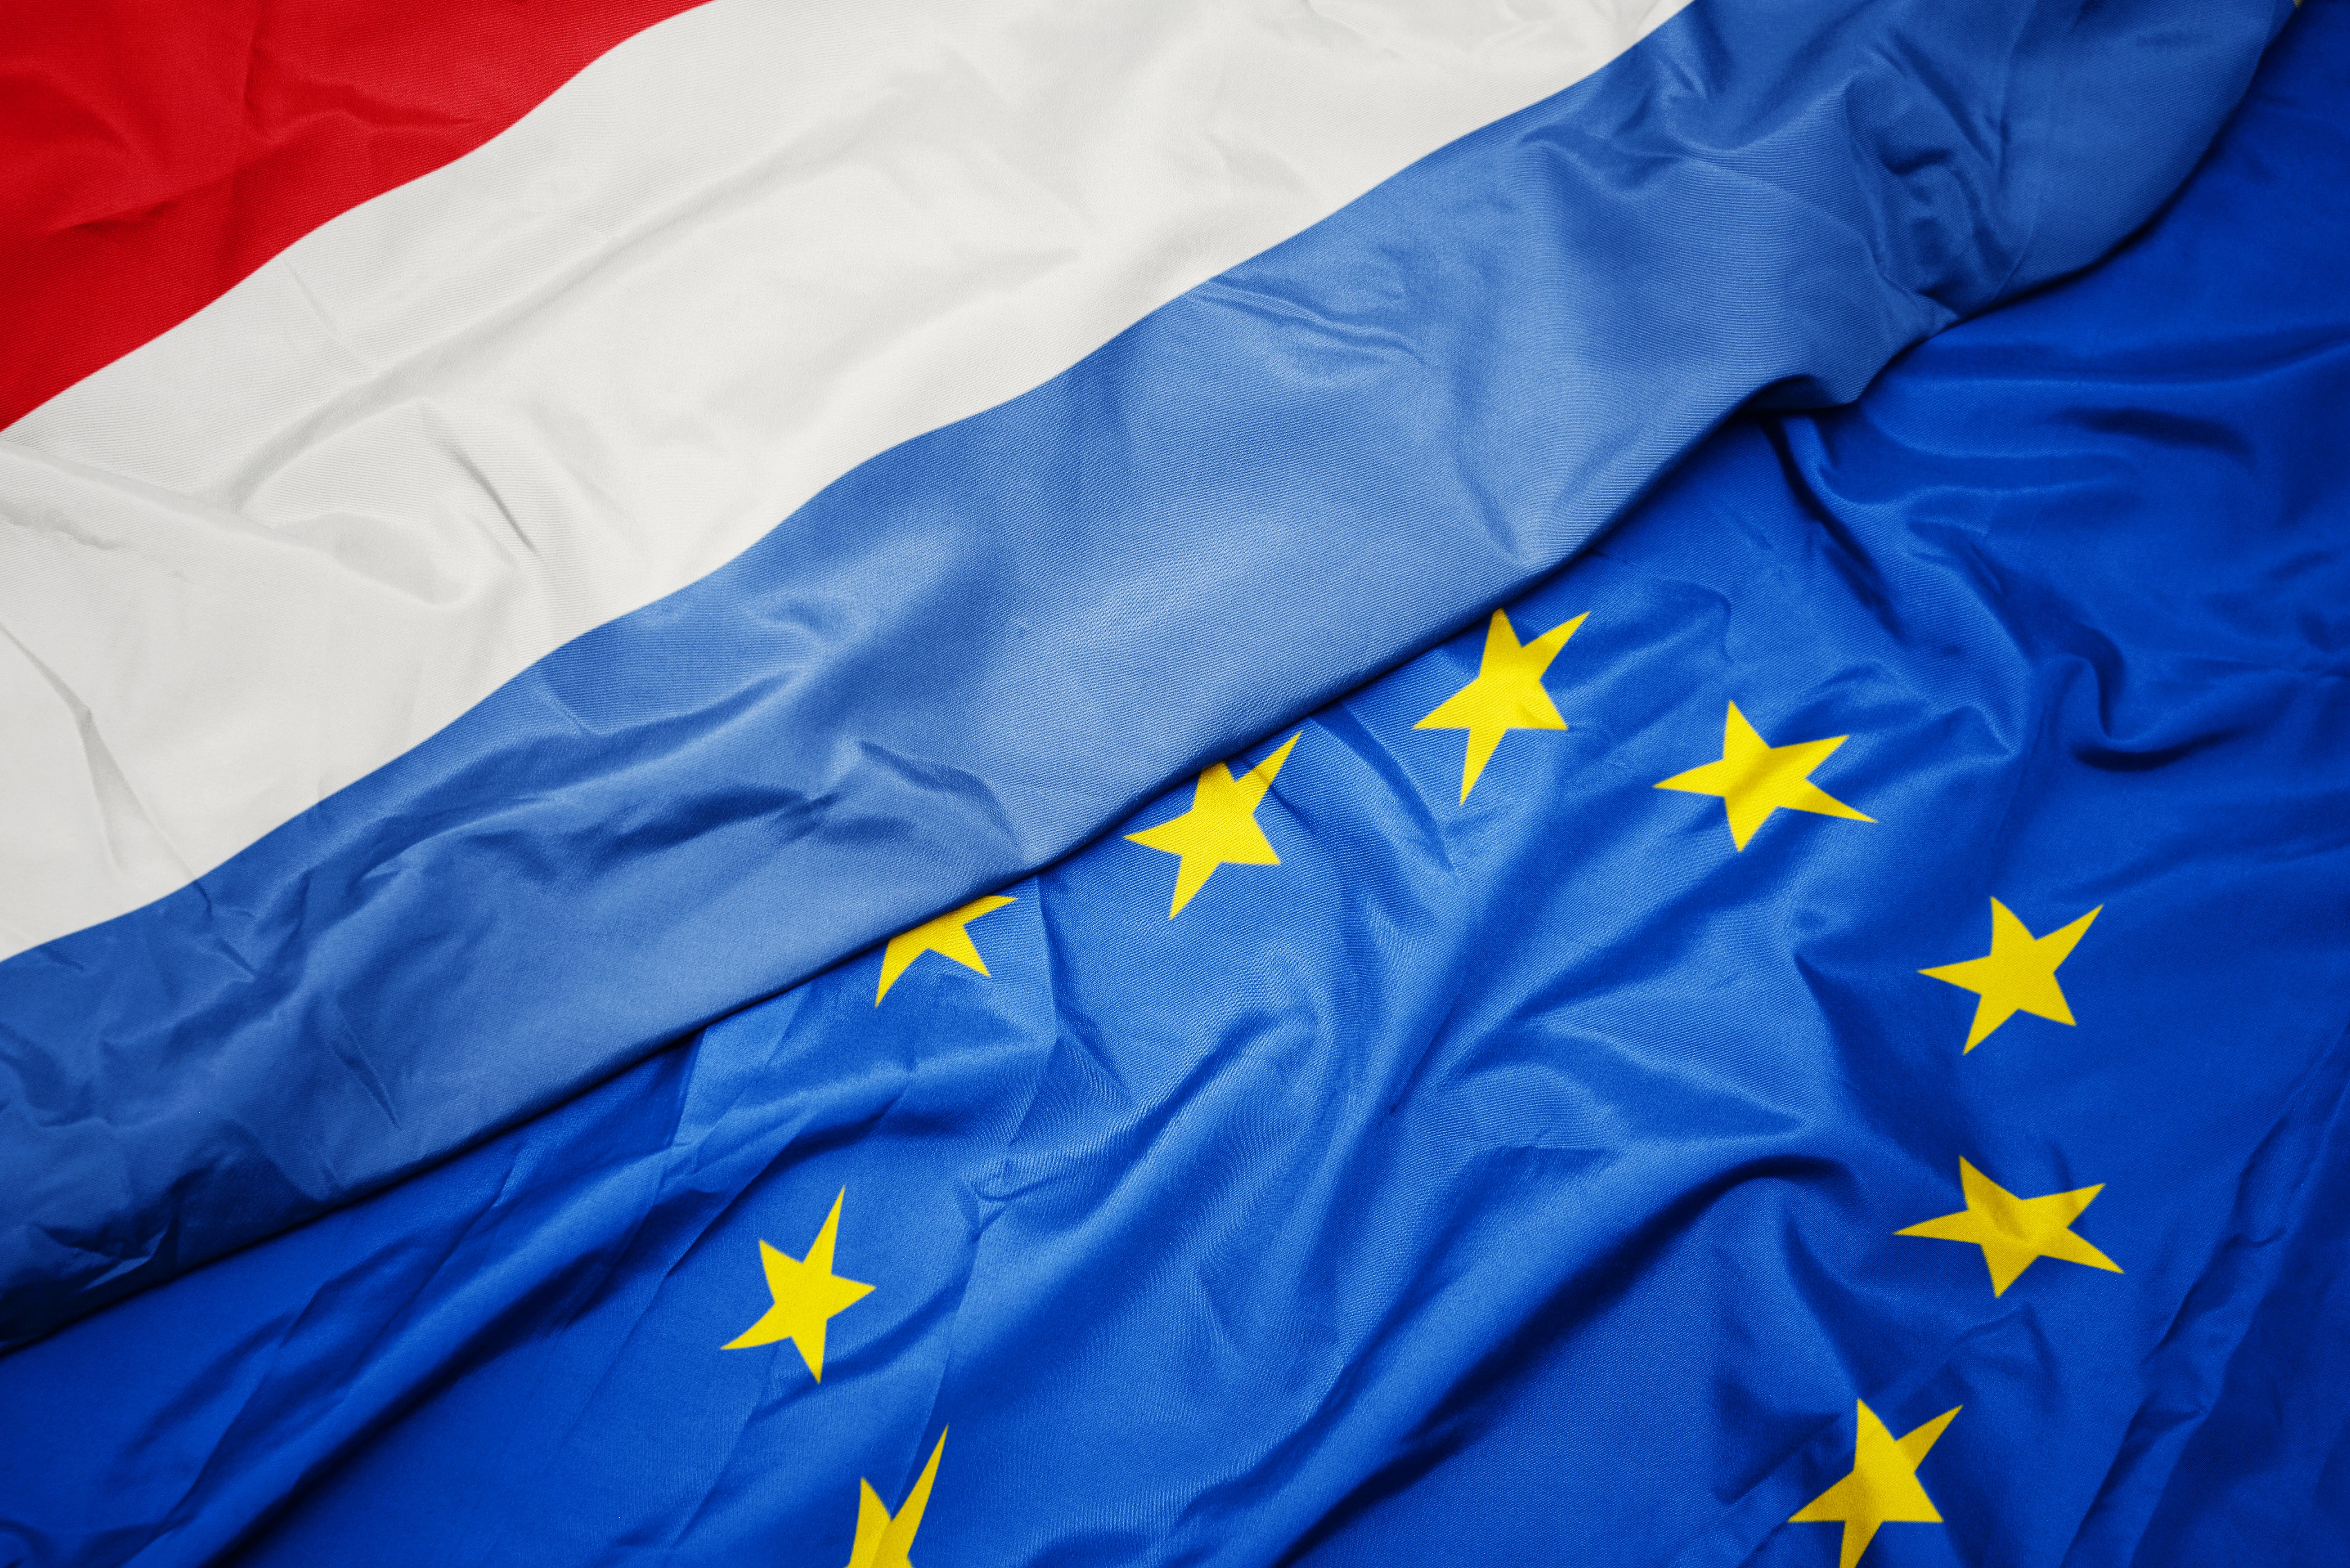 Foto van de Nederlandse en Europese vlag